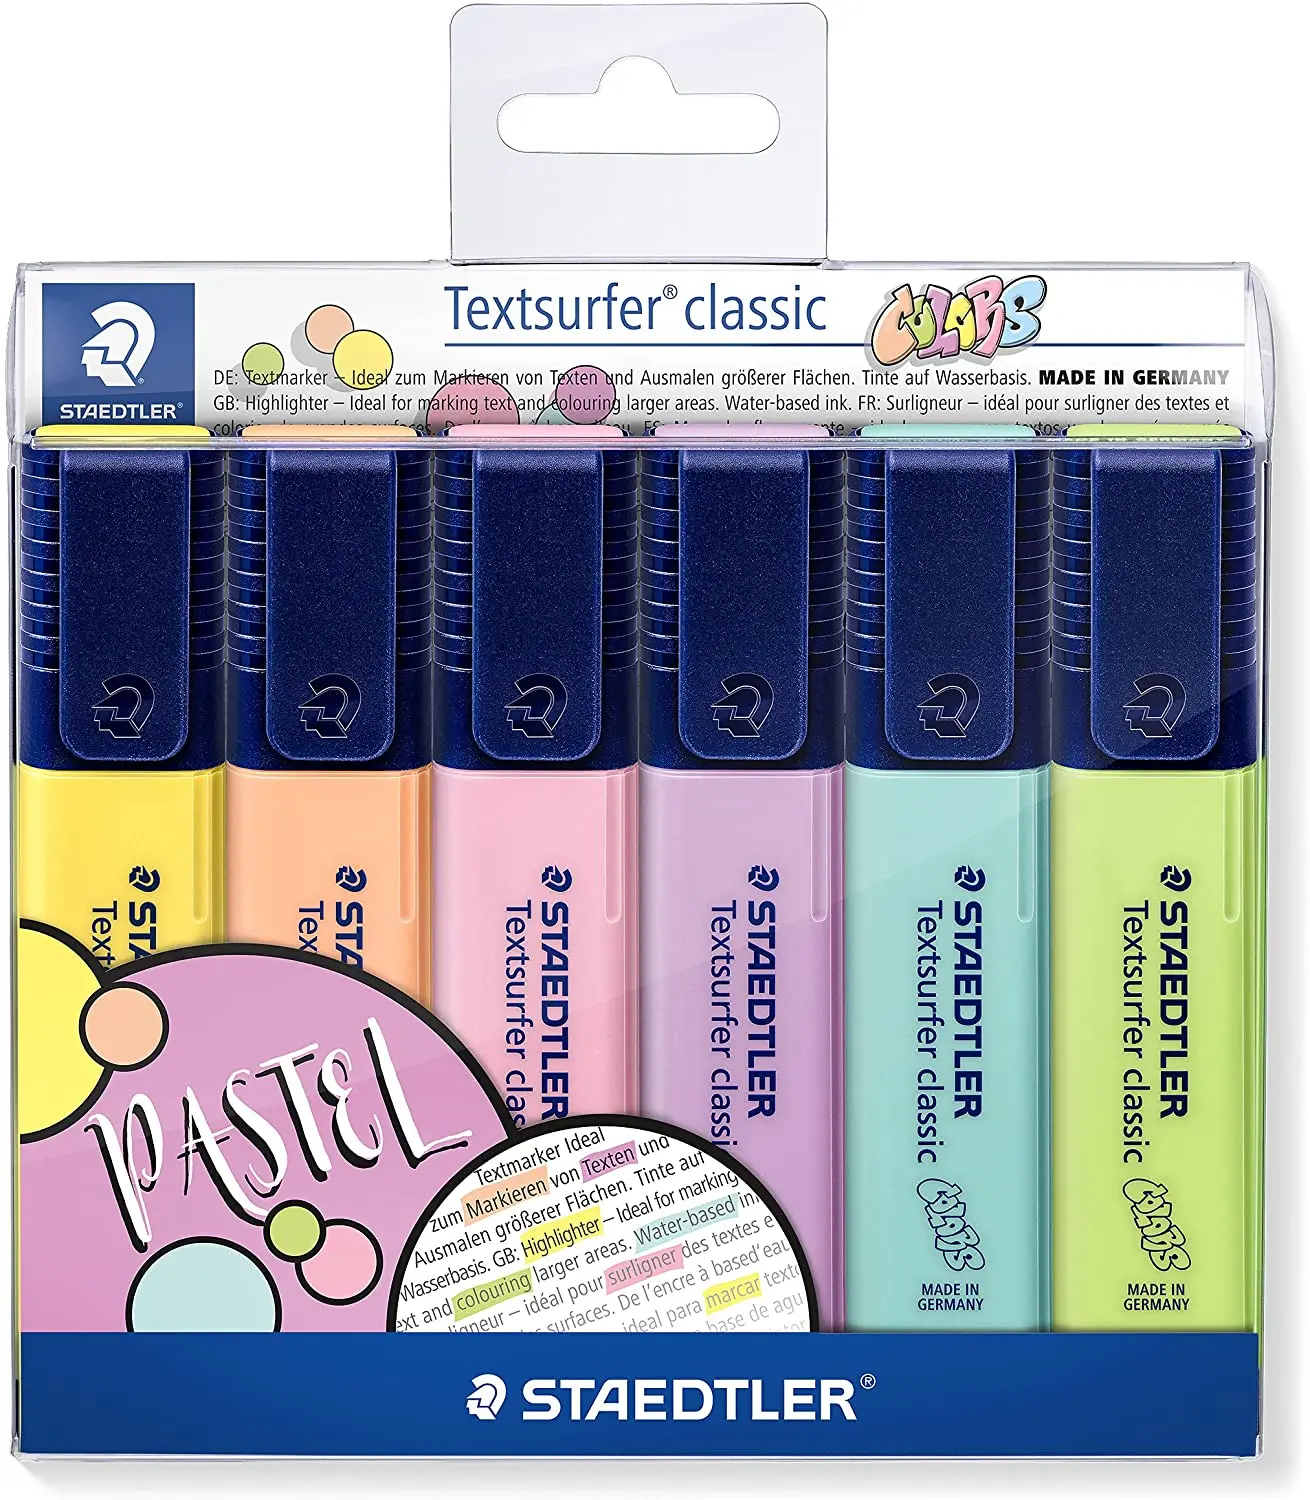 Staedtler Textsurfer Classic 364 Pack de 6 Marcadores Fluorescentes - Secado Rapido - Trazo 1 - 5mm 